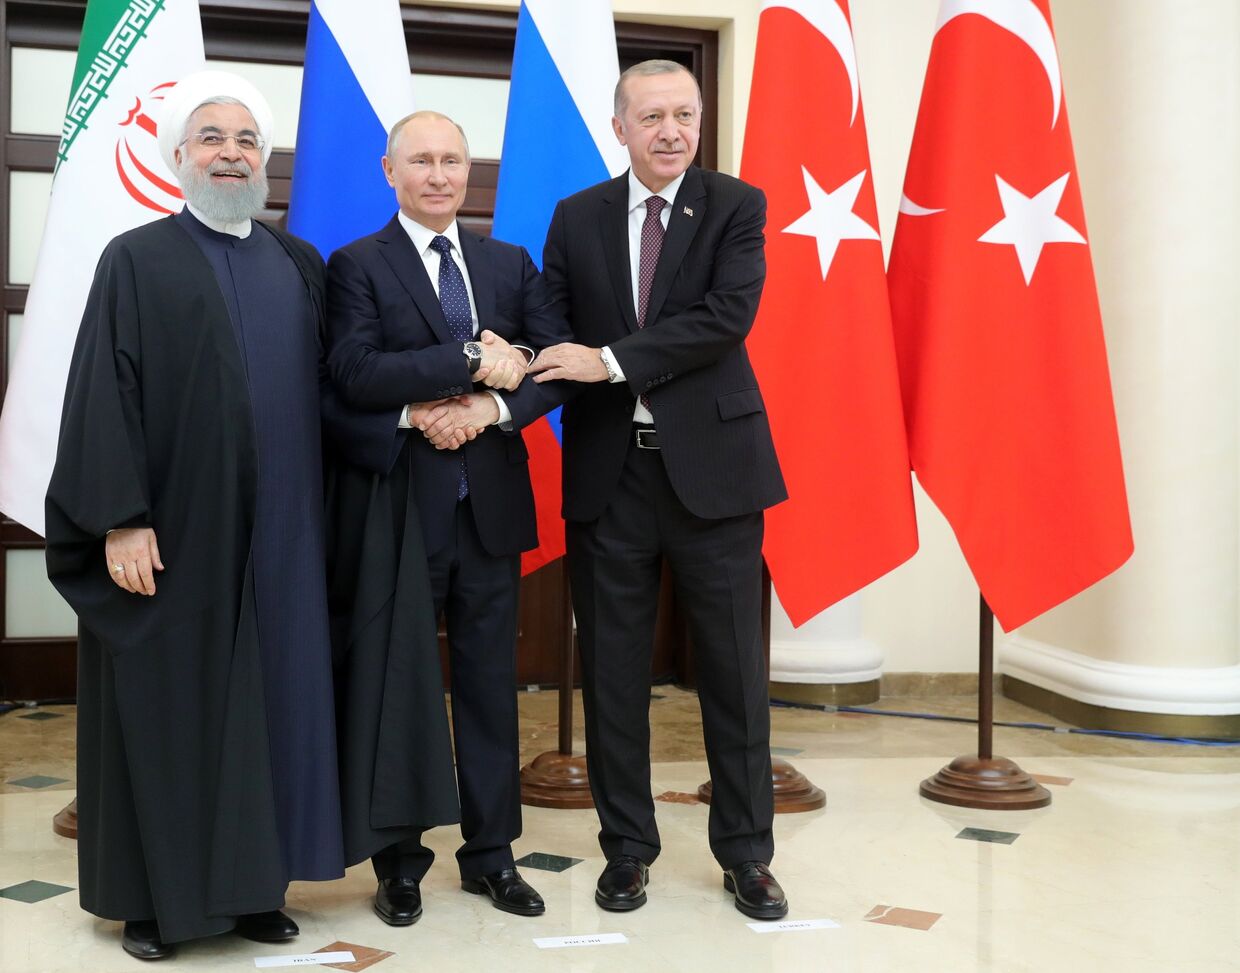 Президент РФ Владимир Путин, президент Турецкой Республики Реджеп Тайип Эрдоган (справа) и президент Исламской Республики Иран Хасан Рухани